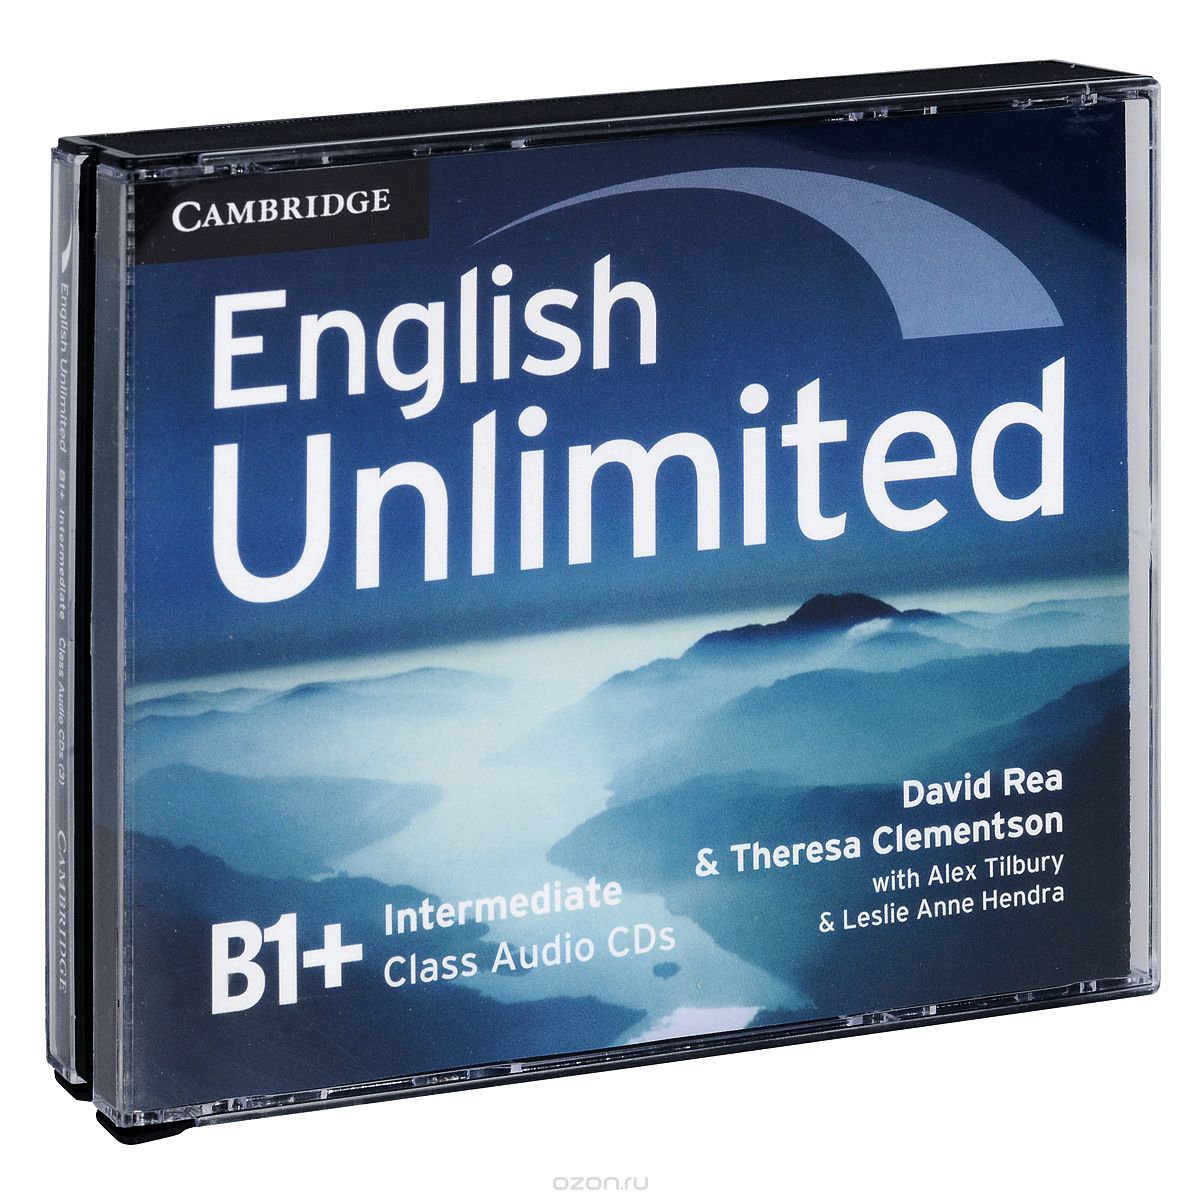 Скачать книгу "English Unlimited: Intermediate B1+: Class Audio CDs (аудиокурс на 3 CD)"